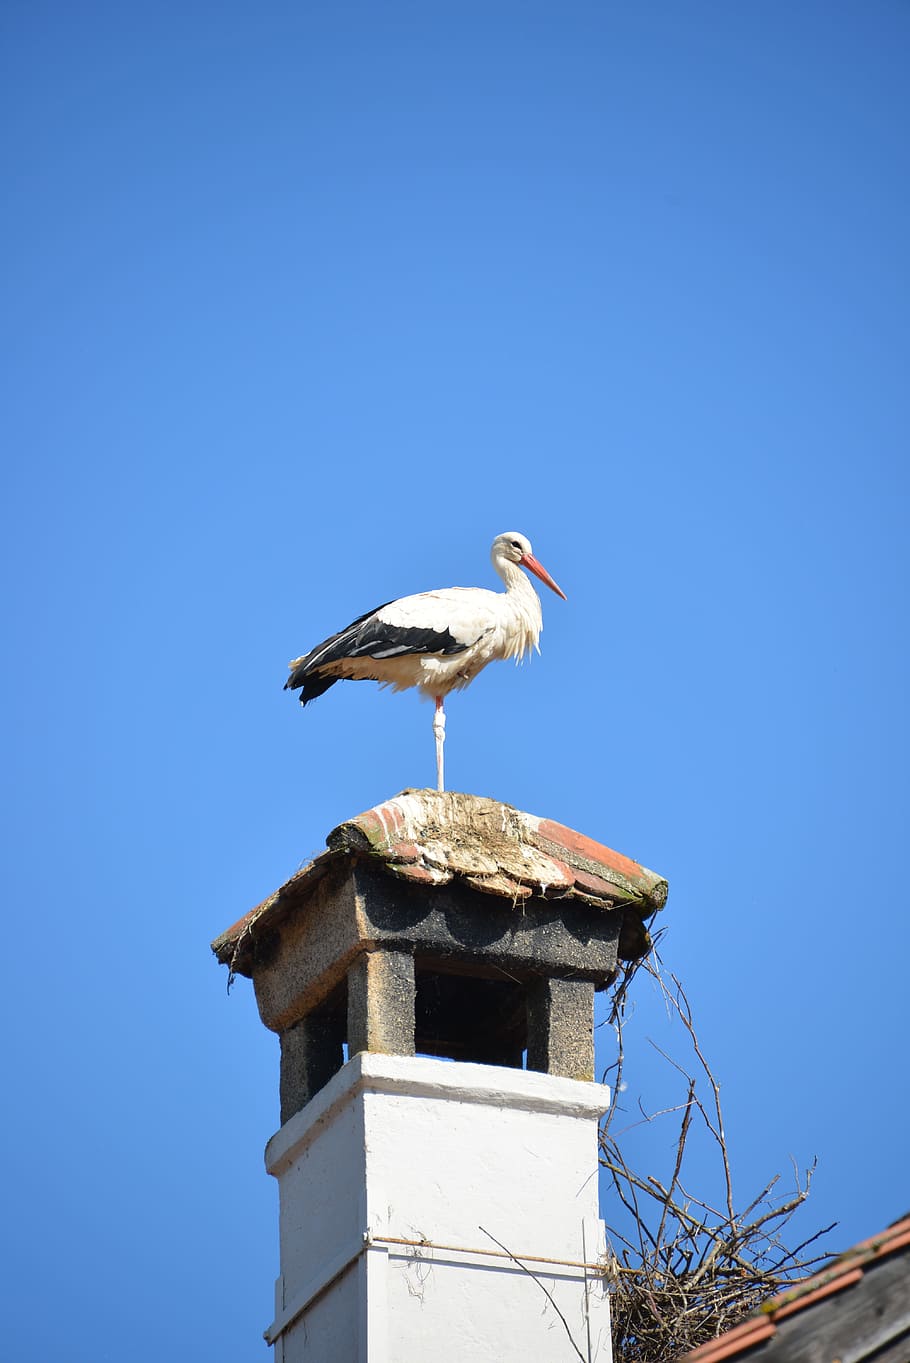 Rattle, Stork, Fireplace, Bird, rattle stork, animal, roof, brick, roofing, animal Nest